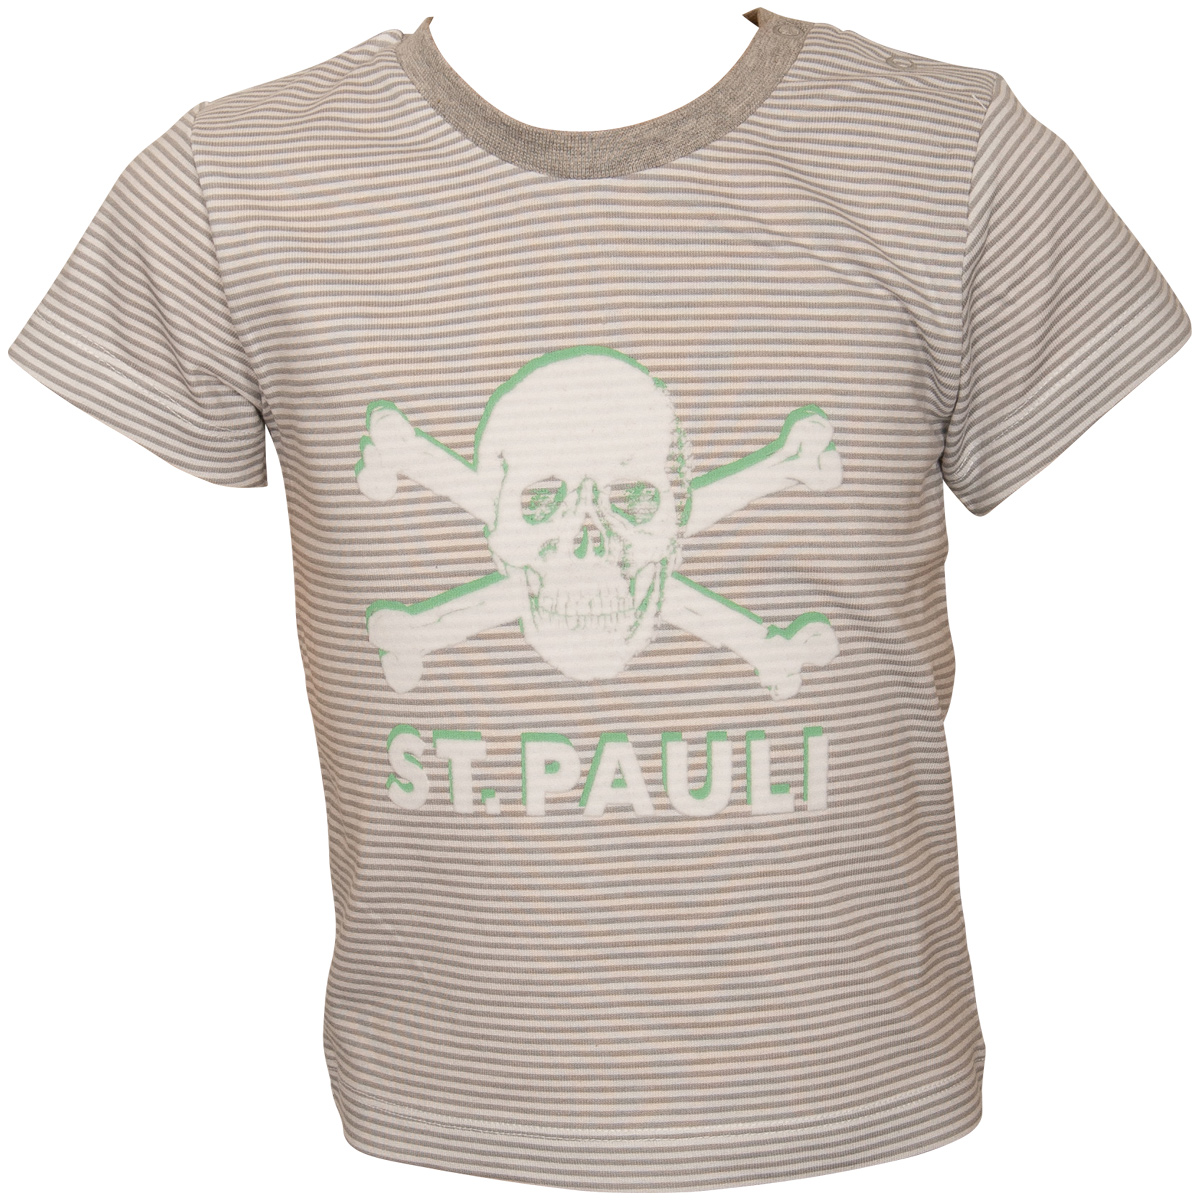 FC St. Pauli - Baby T-Shirt Totenkopf - Grau Weiß Gestreift